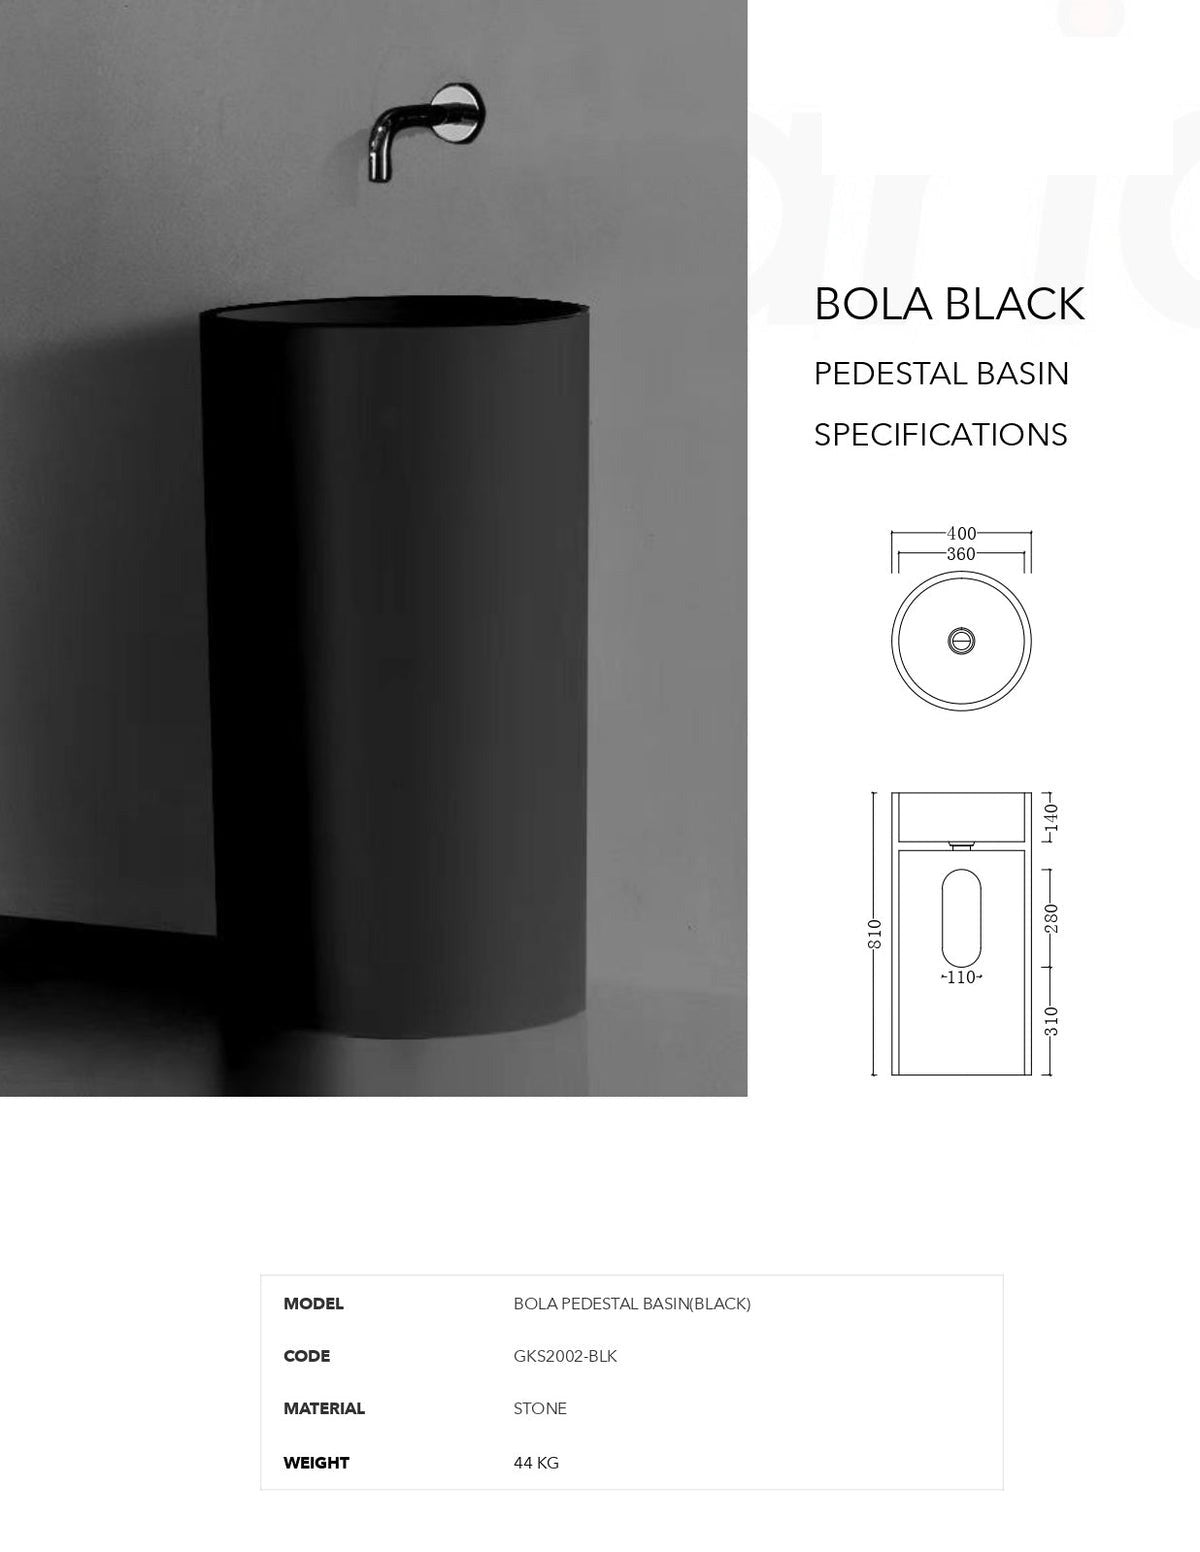 GALLARIA BOLA FREESTANDING PEDESTAL STONE BASIN BLACK 400MM X 810MM